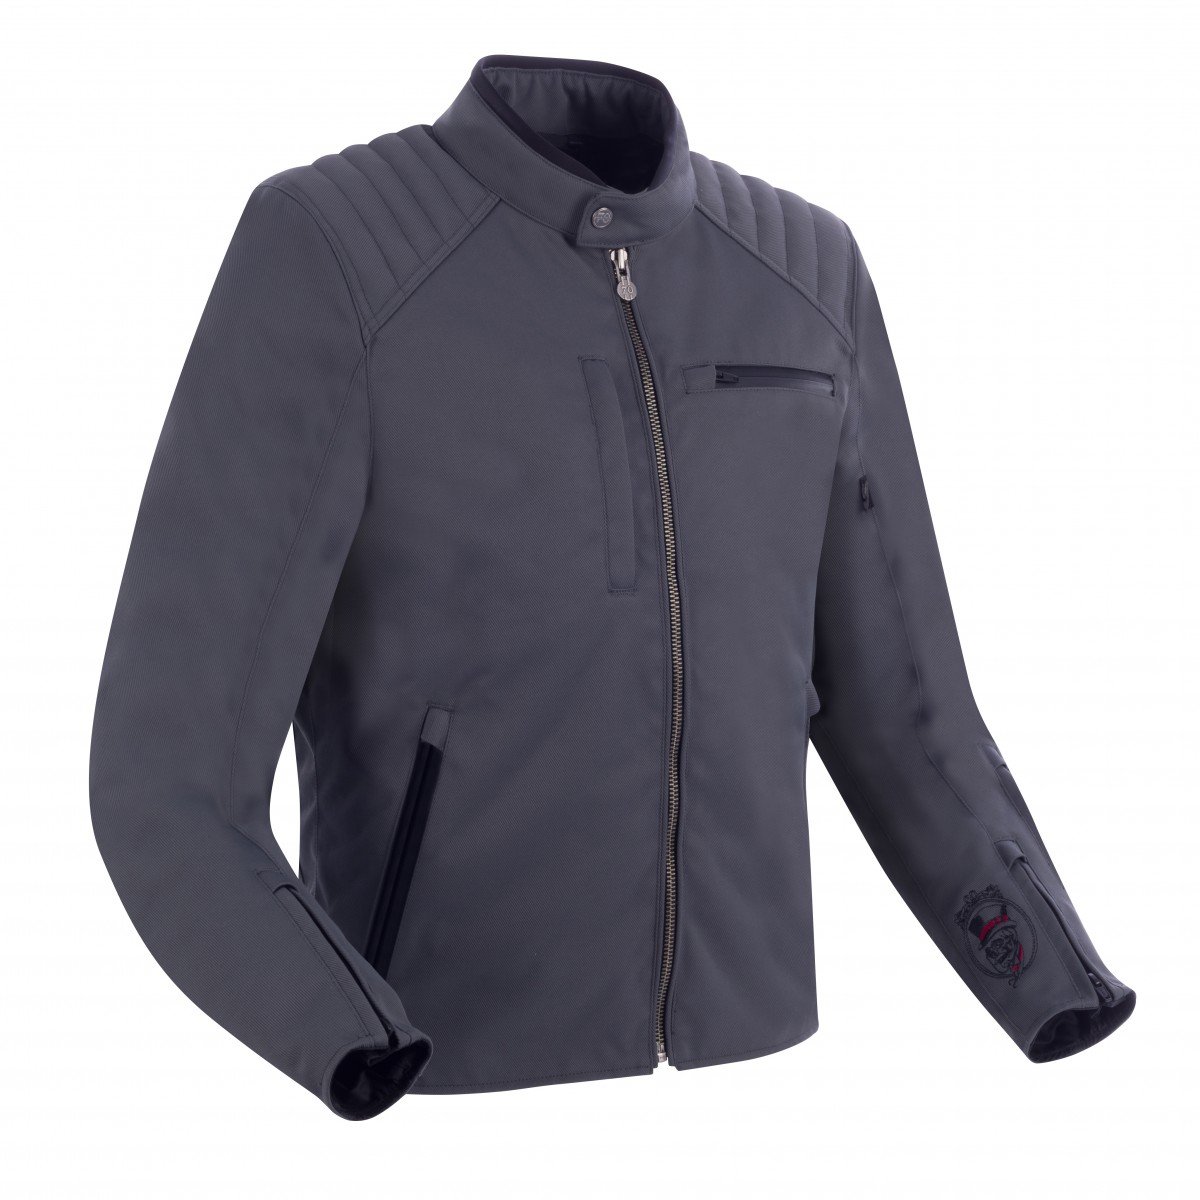 Image of Segura Eternal Jacket Gray Size XL ID 3660815168653